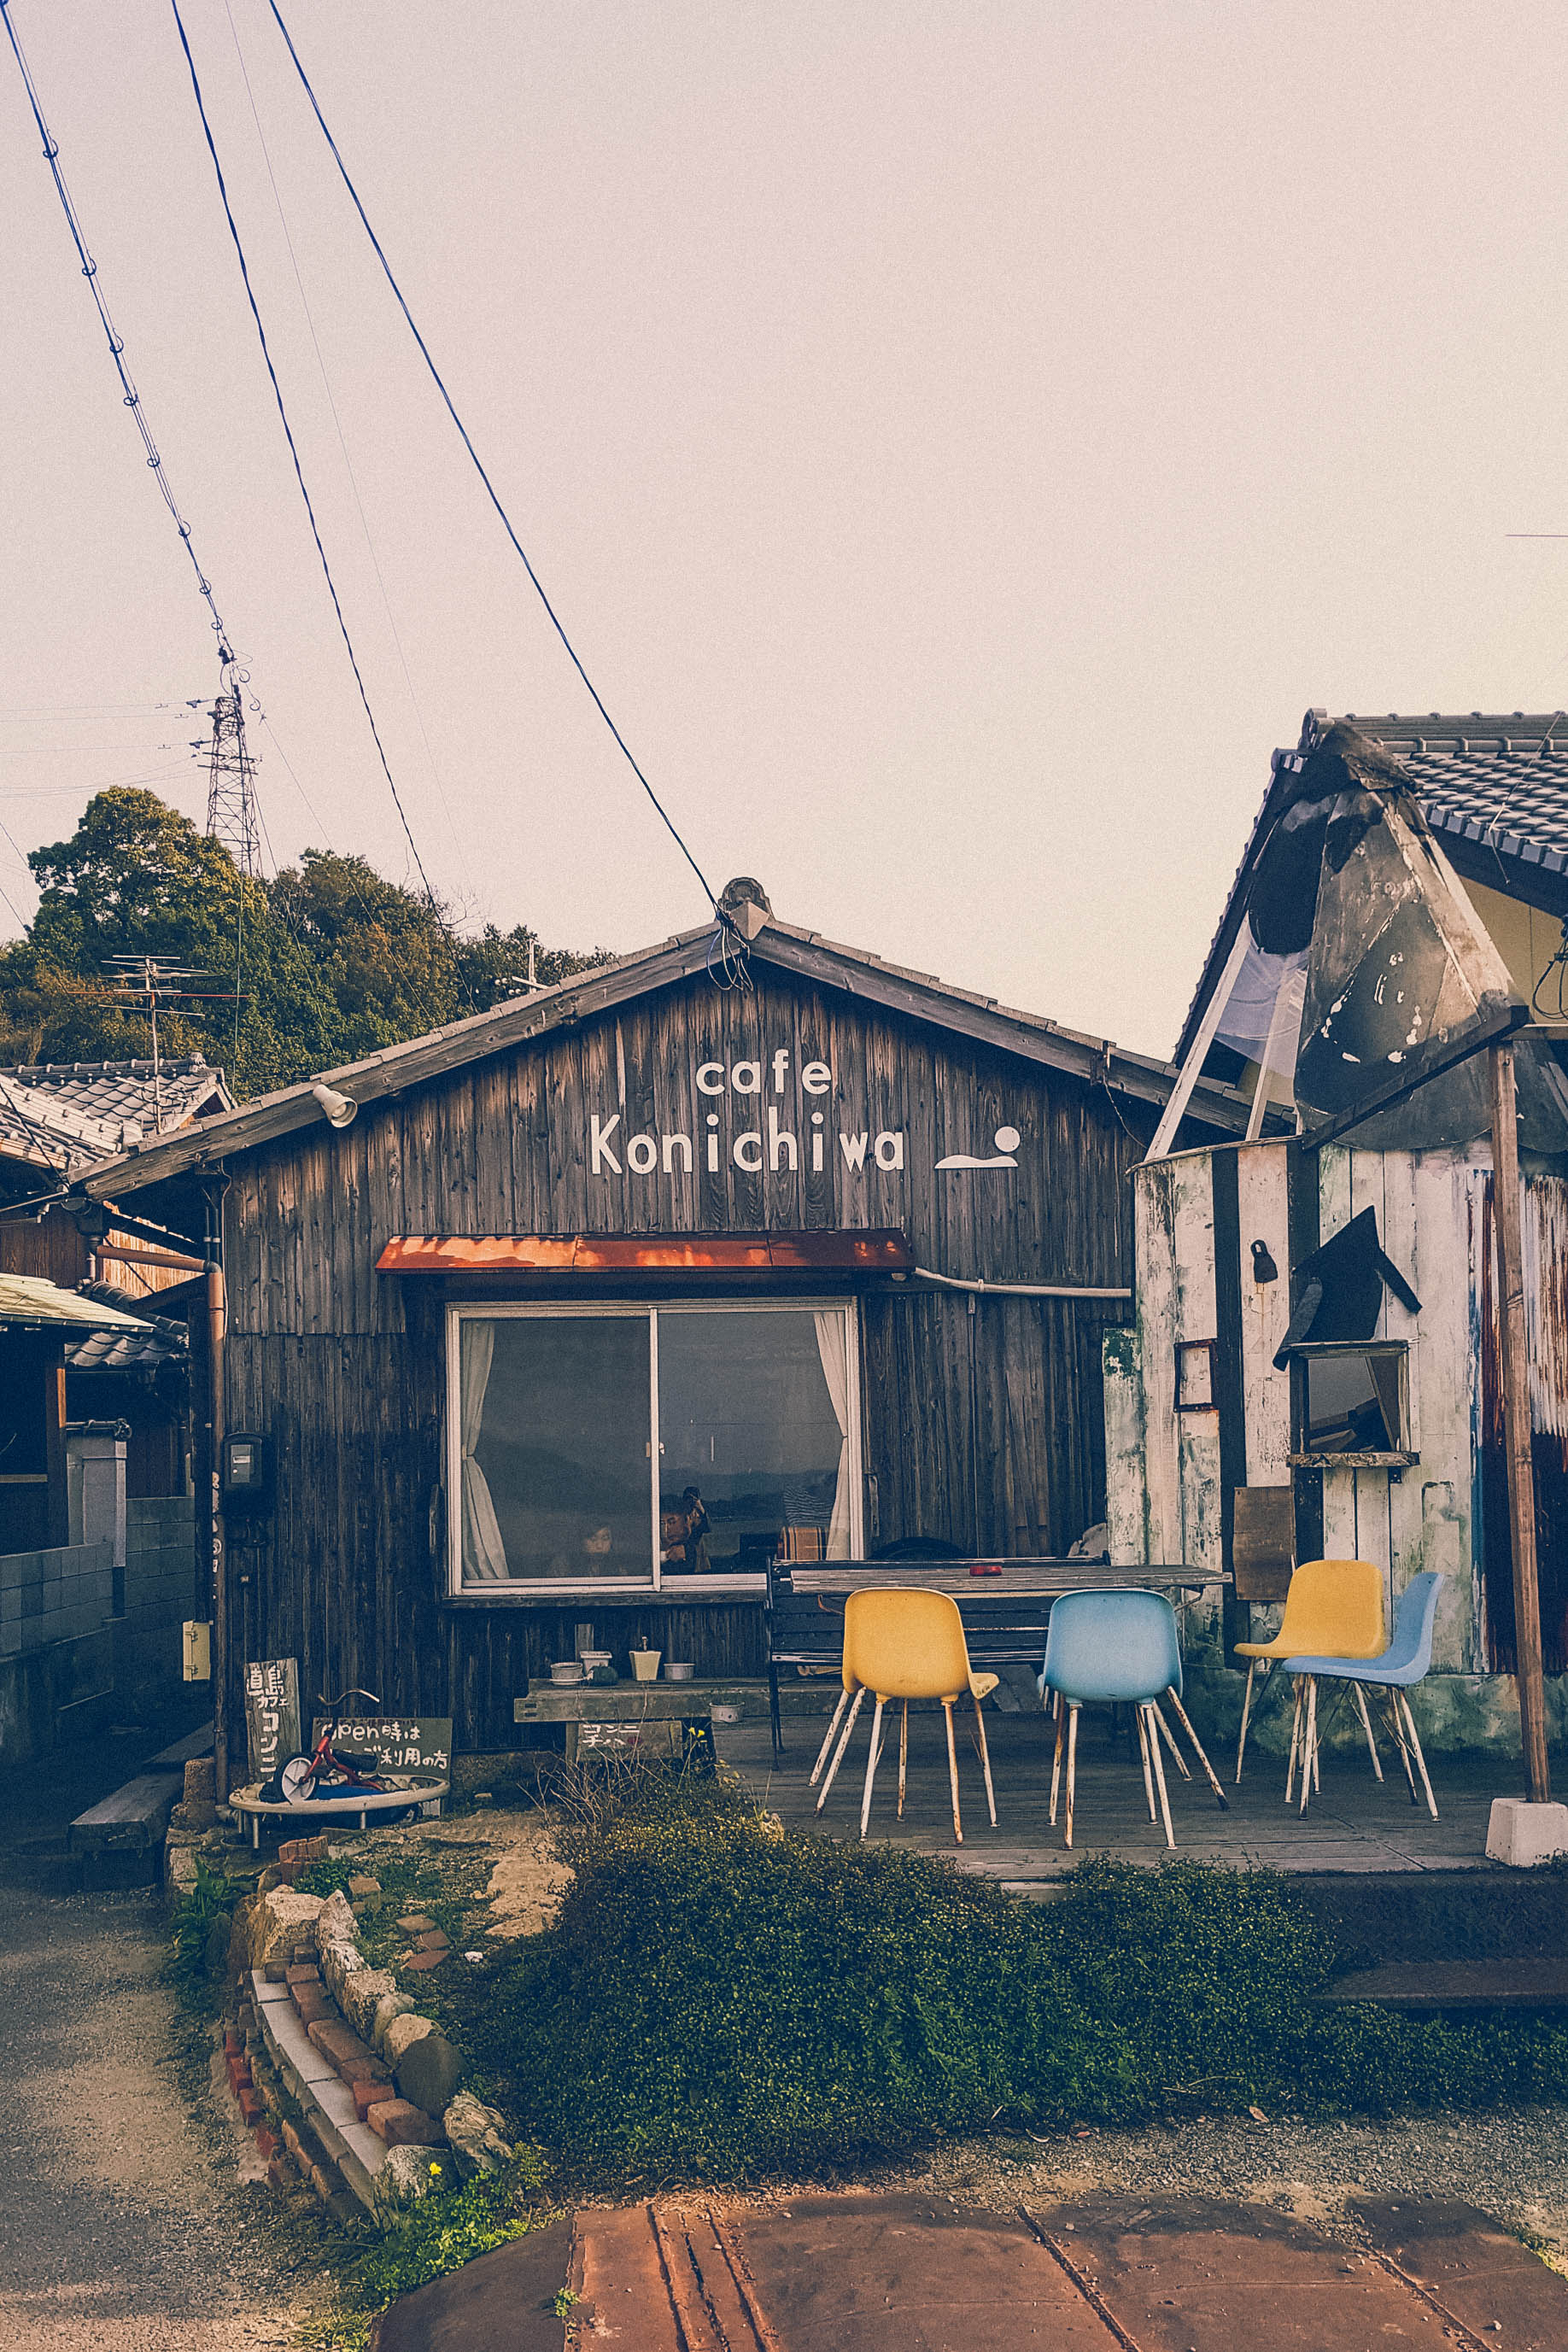 Cafe Konichiwa, Honmura port